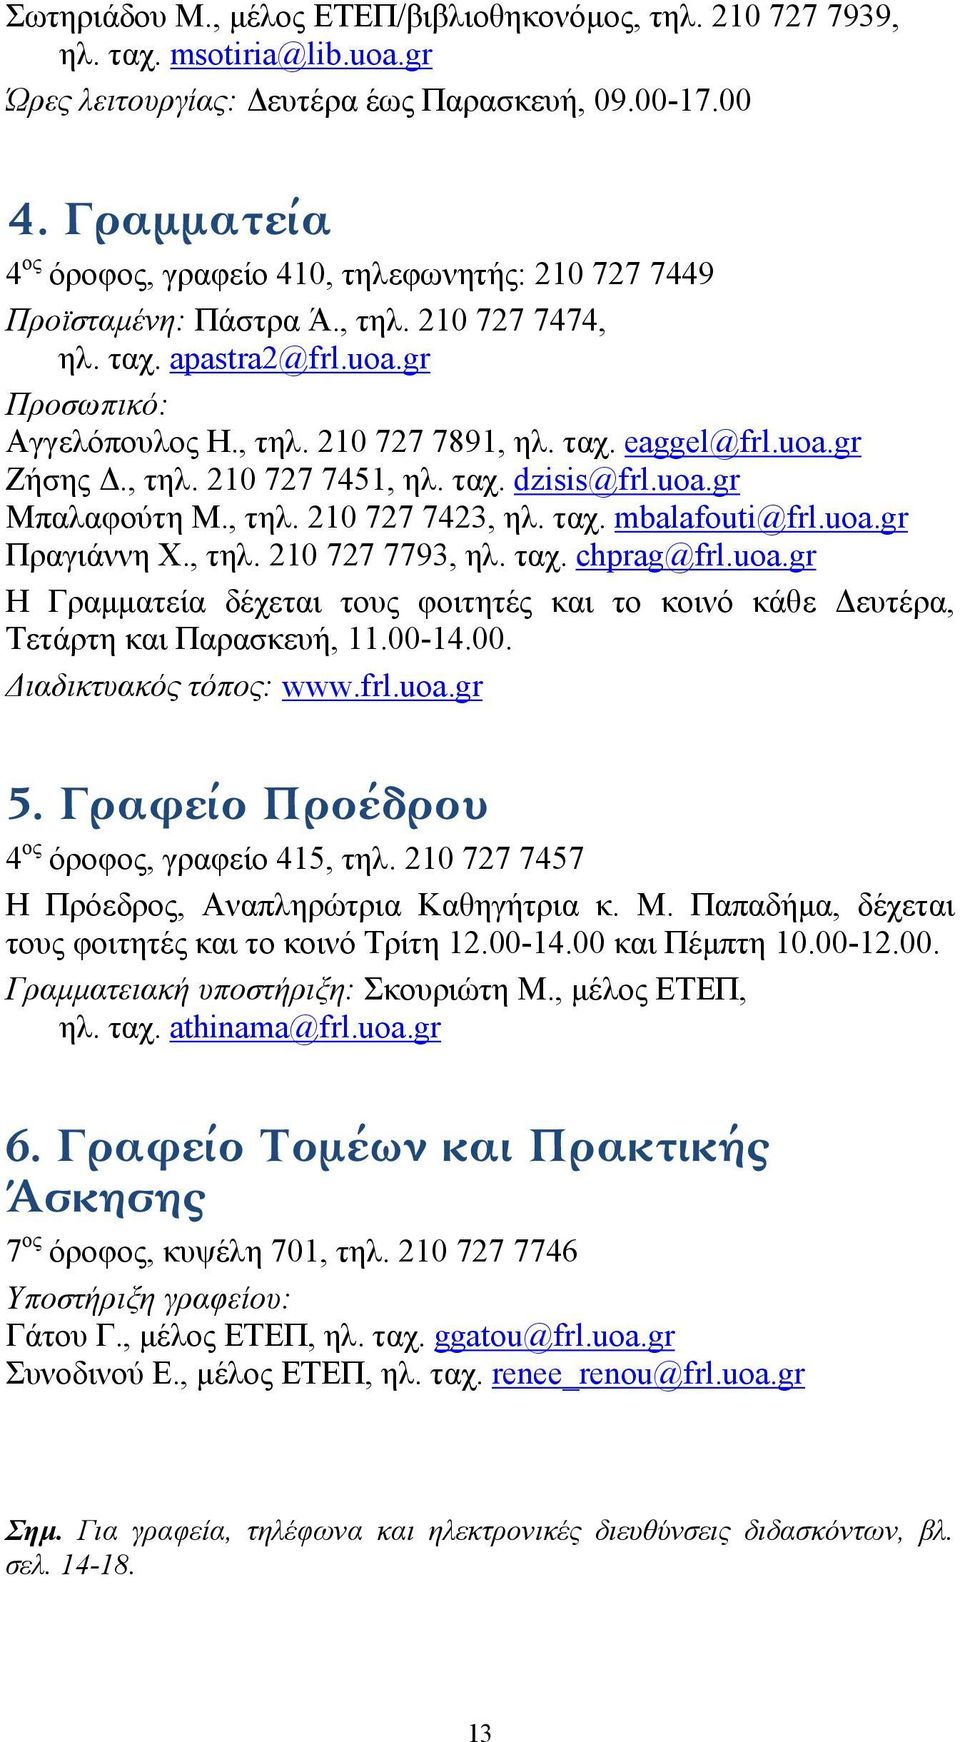 uoa.gr Ζήσης Δ., τηλ. 210 727 7451, ηλ. ταχ. dzisis@frl.uoa.gr Μπαλαφούτη Μ., τηλ. 210 727 7423, ηλ. ταχ. mbalafouti@frl.uoa.gr Πραγιάννη Χ., τηλ. 210 727 7793, ηλ. ταχ. chprag@frl.uoa.gr Η Γραμματεία δέχεται τους φοιτητές και το κοινό κάθε Δευτέρα, Τετάρτη και Παρασκευή, 11.